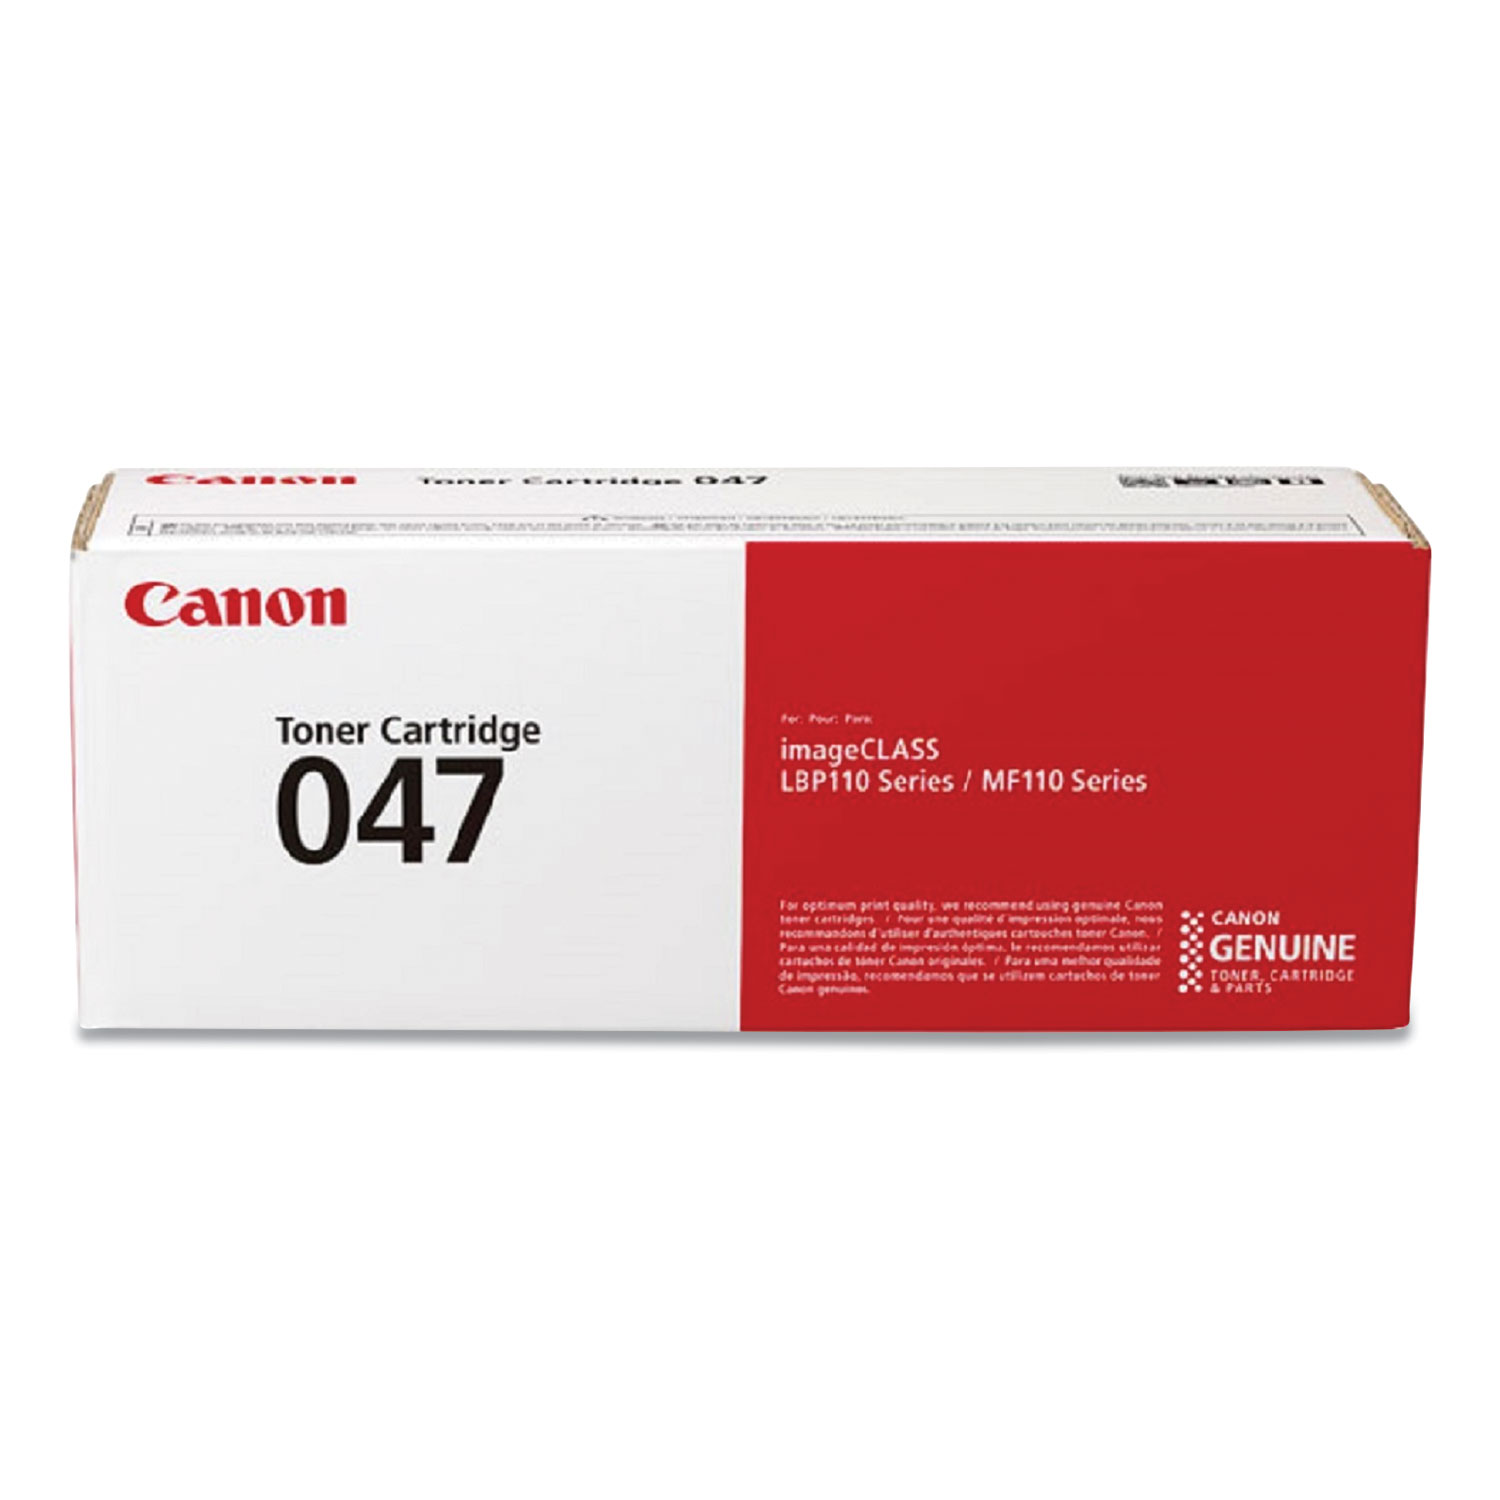  Canon 2164C001 2164C001 (047) Toner, 1,600 Page-Yield, Black (CNM2164C001) 